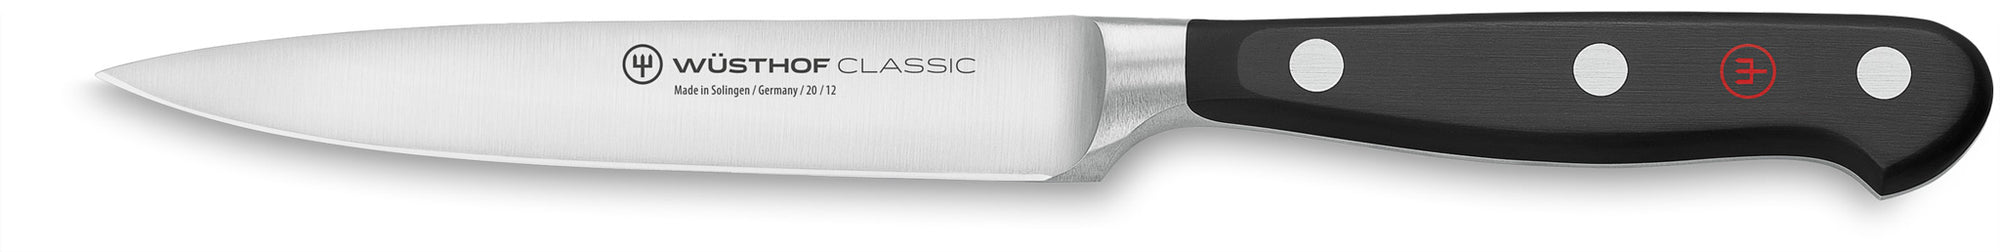 Wusthof Classic 4066-12 utility paring knife canada